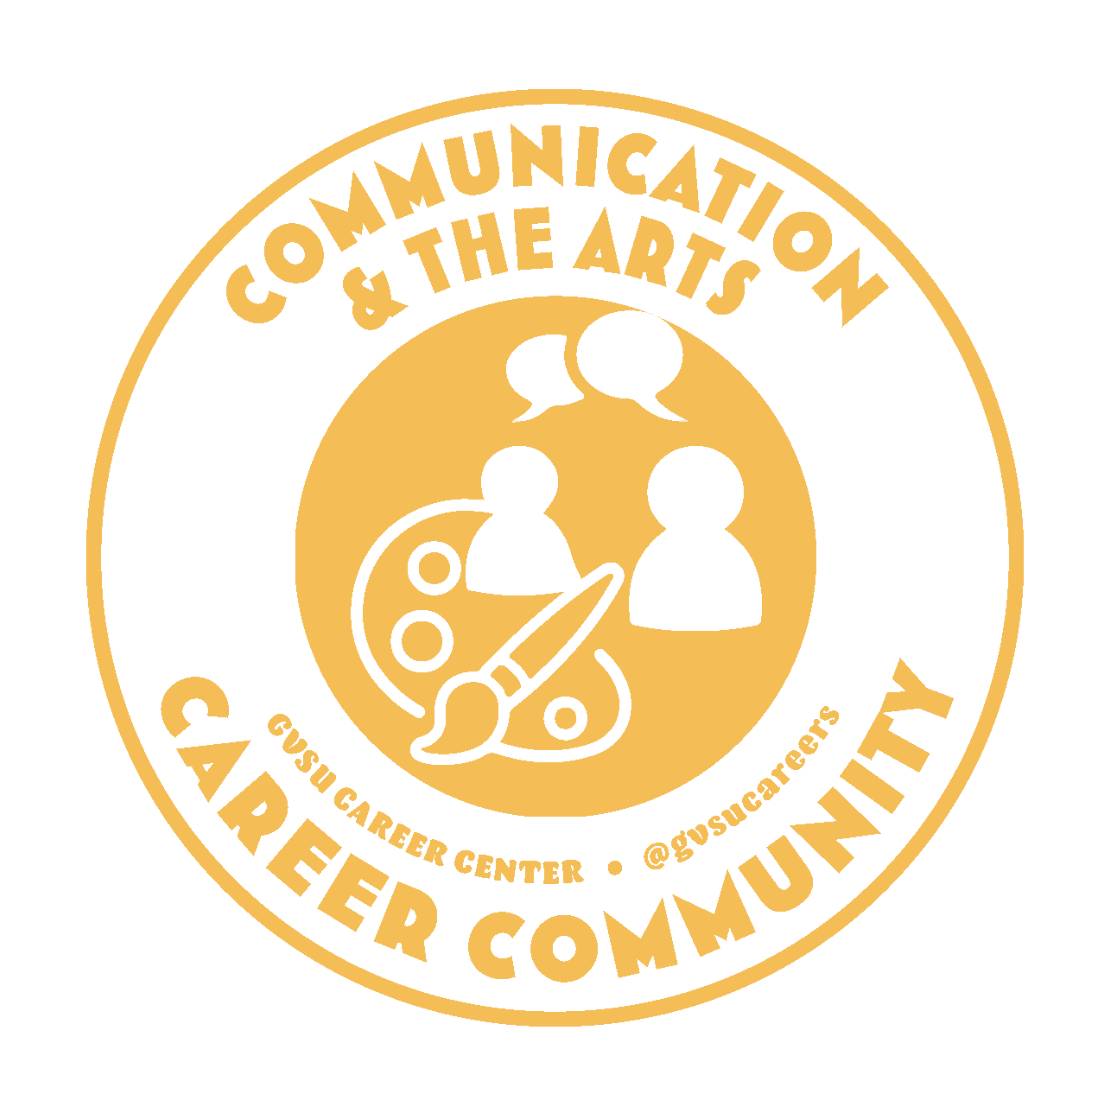 Communication community